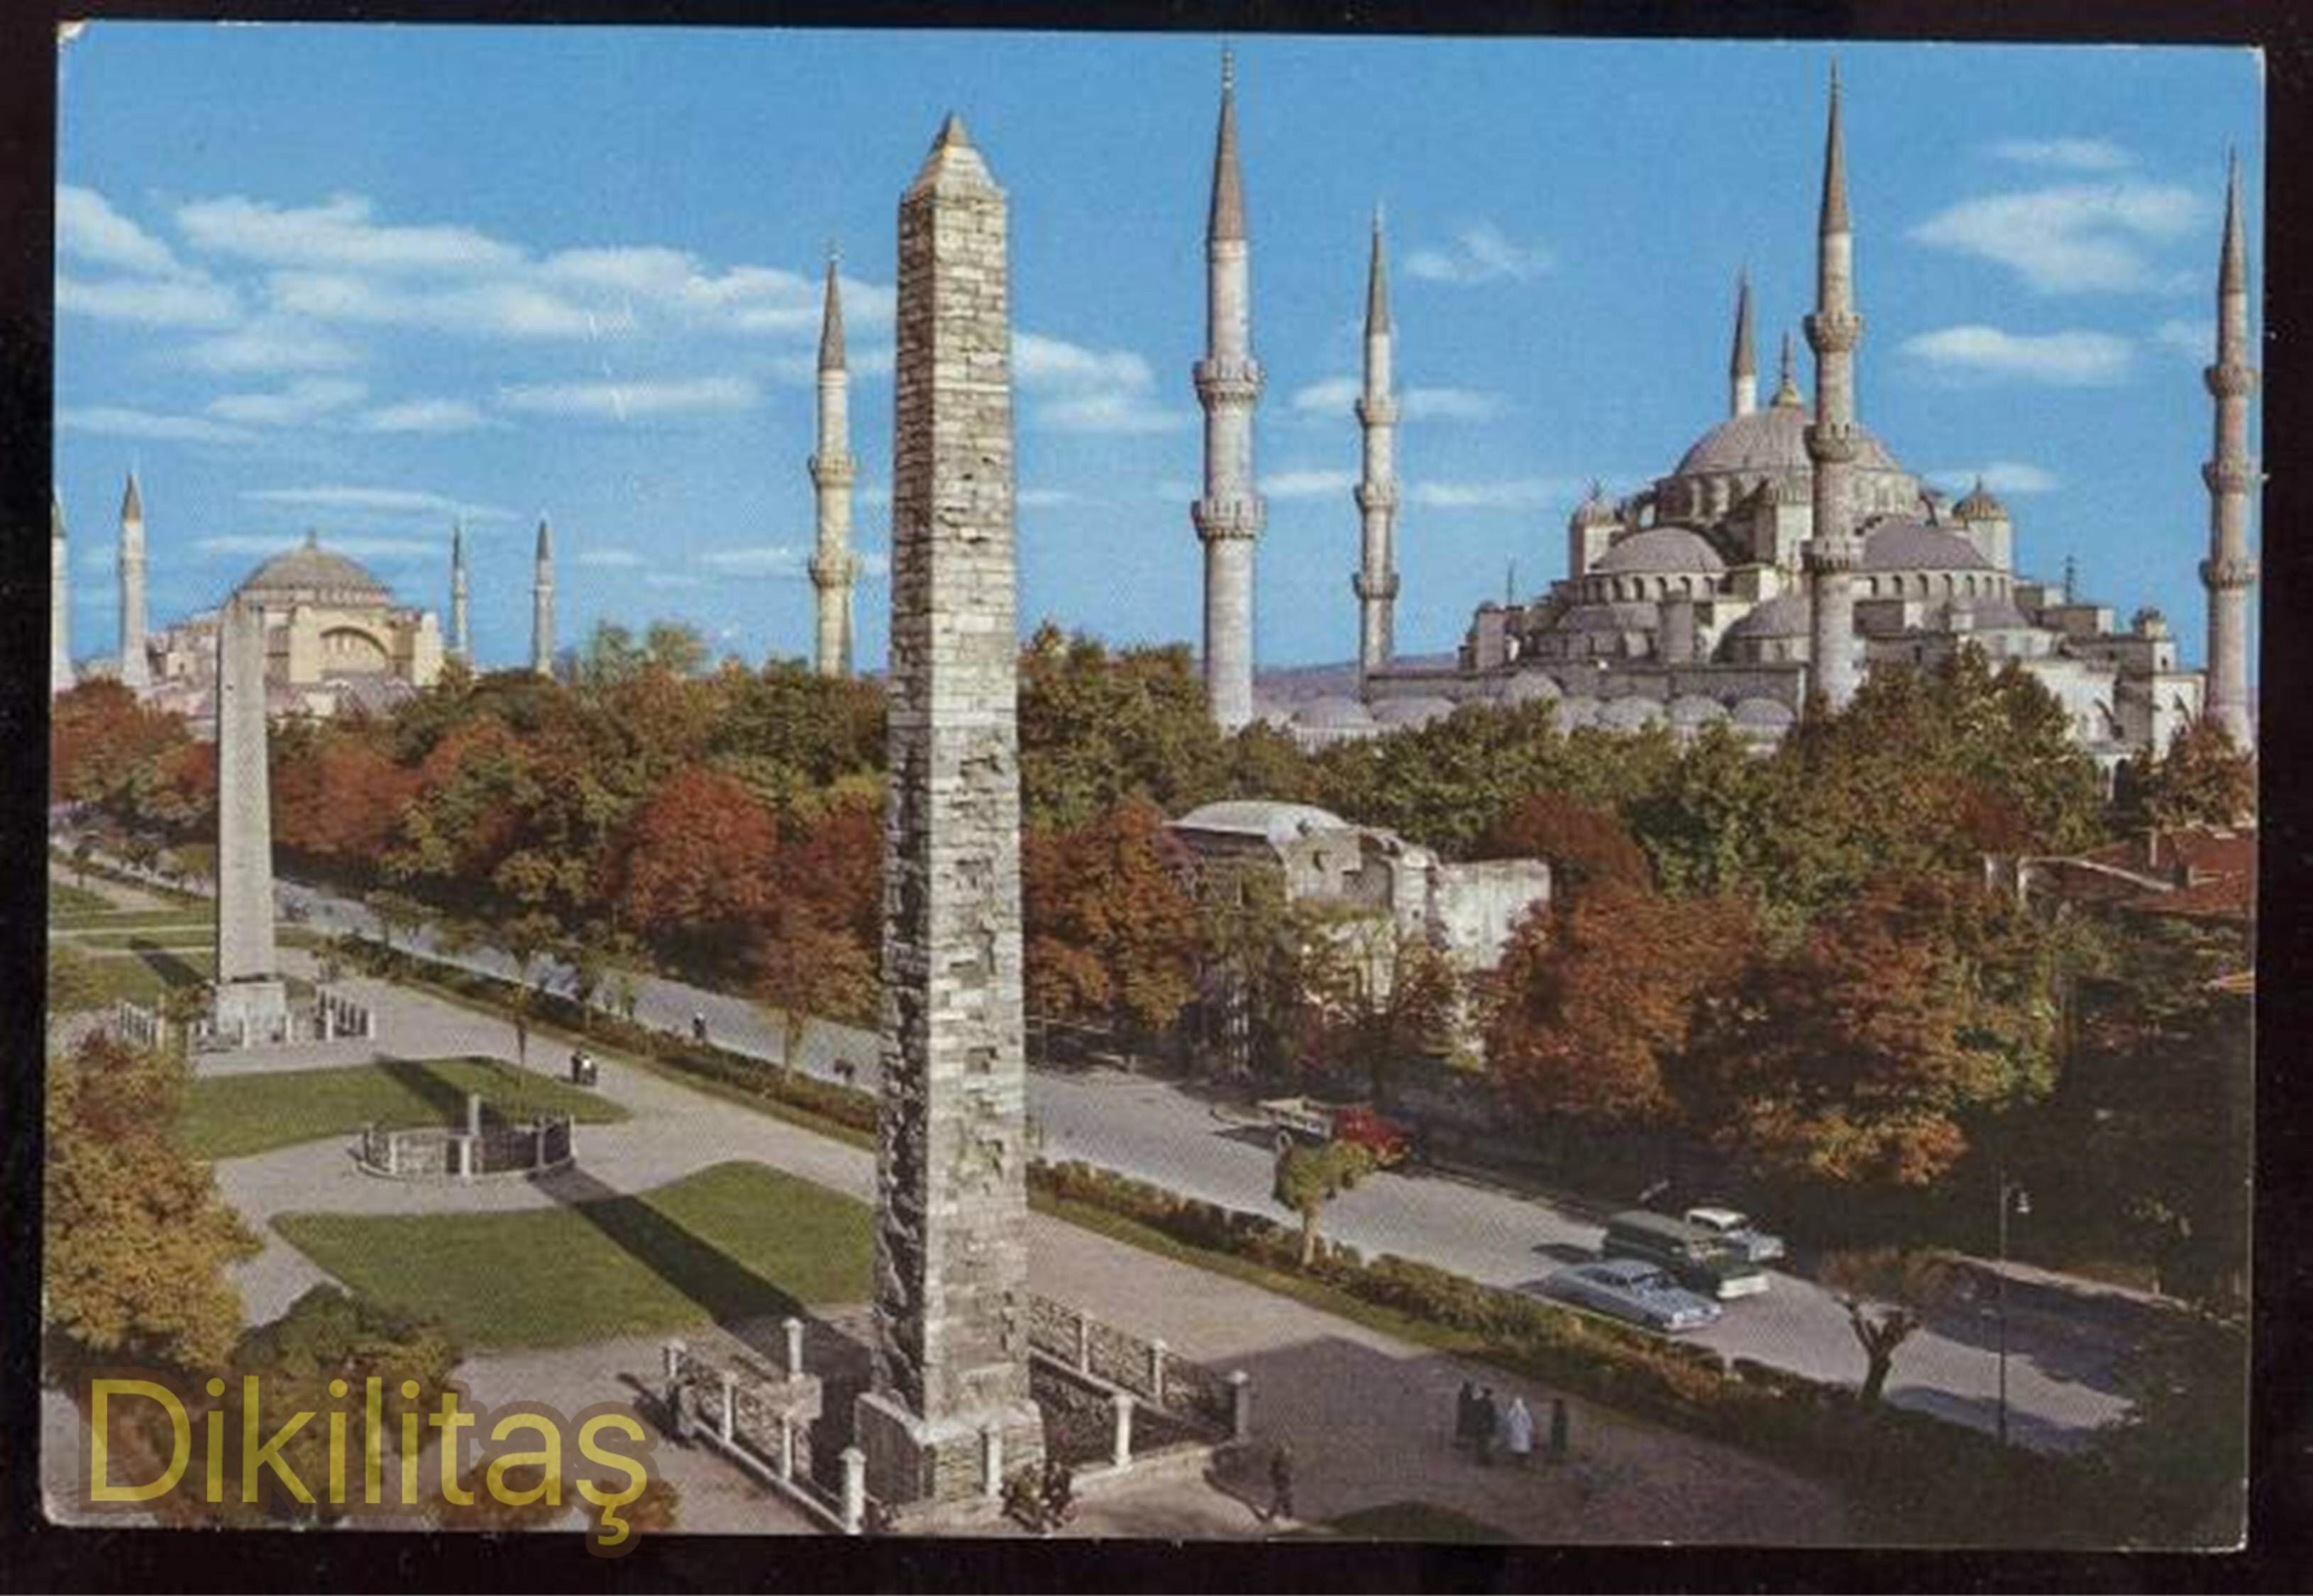 Gulhanepark Hotel & Spa Istanbul Ngoại thất bức ảnh